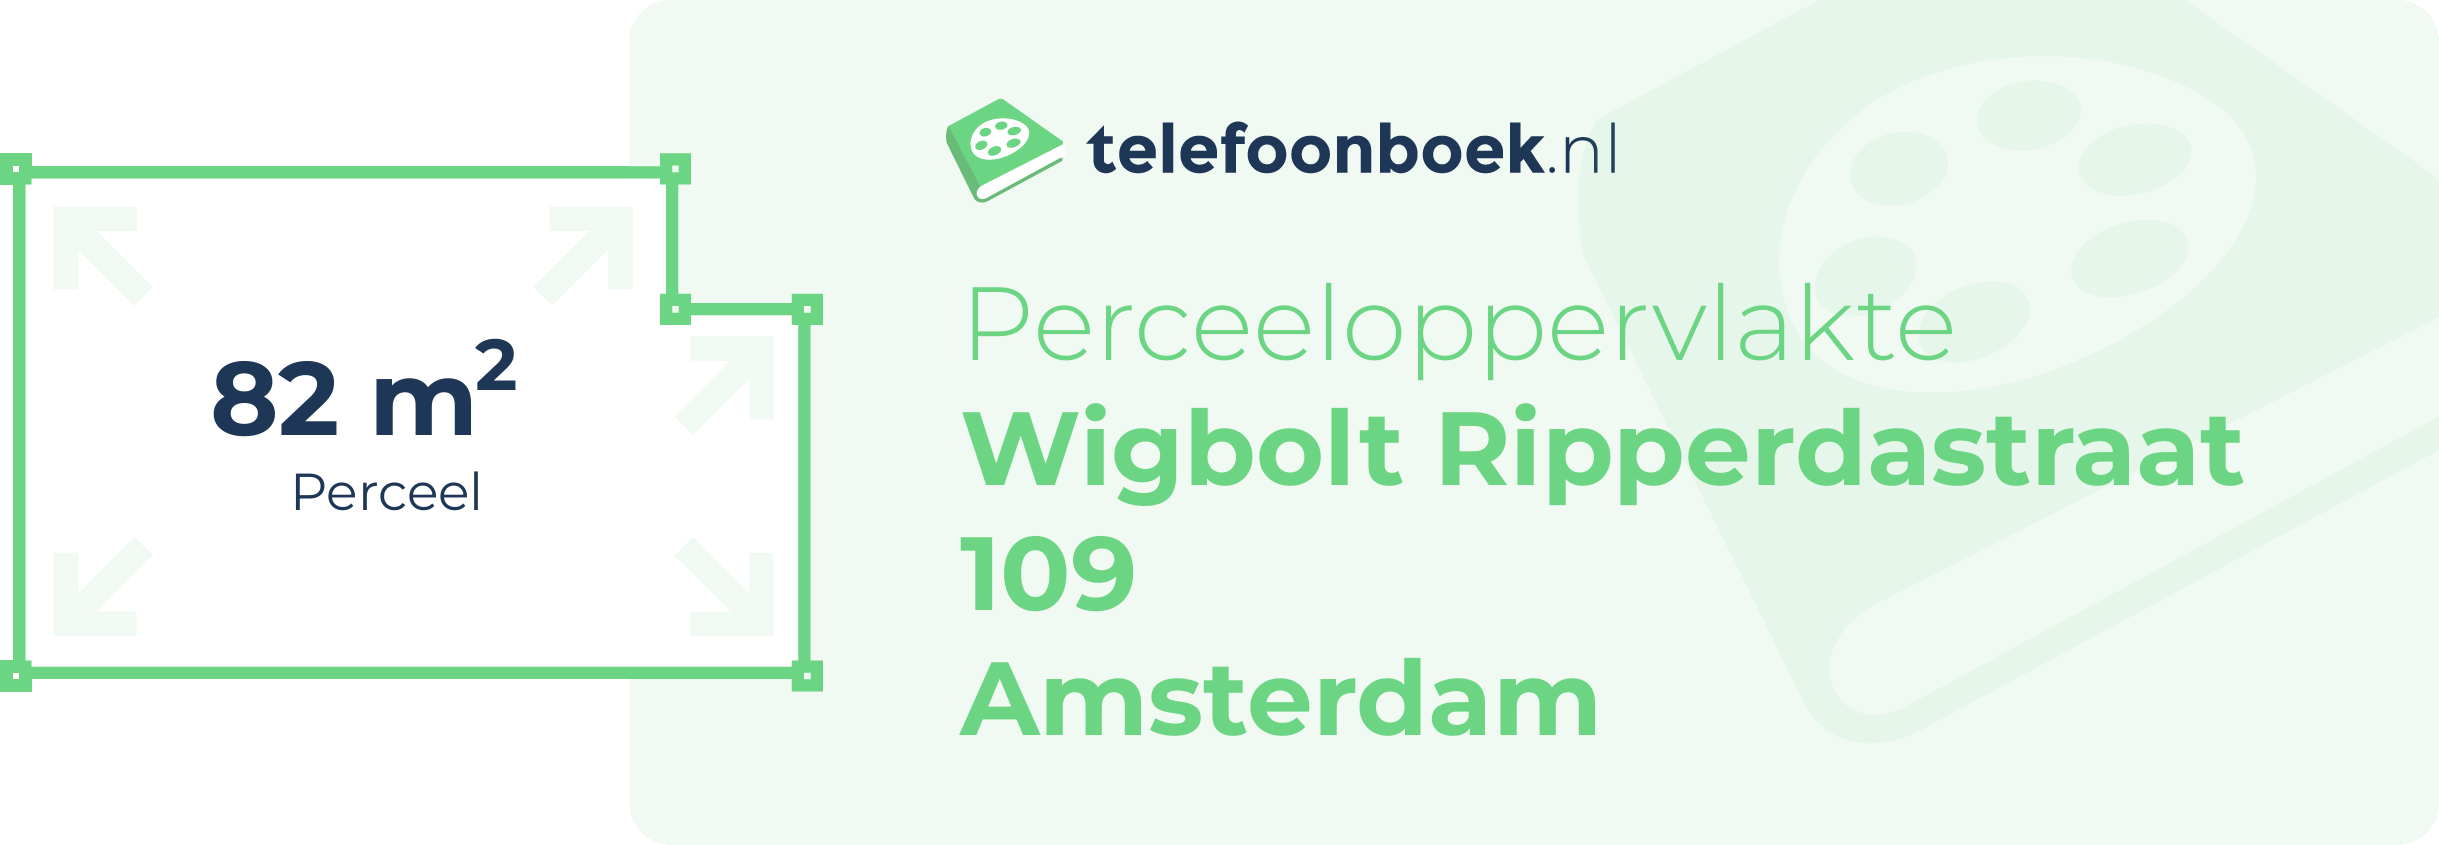 Perceeloppervlakte Wigbolt Ripperdastraat 109 Amsterdam